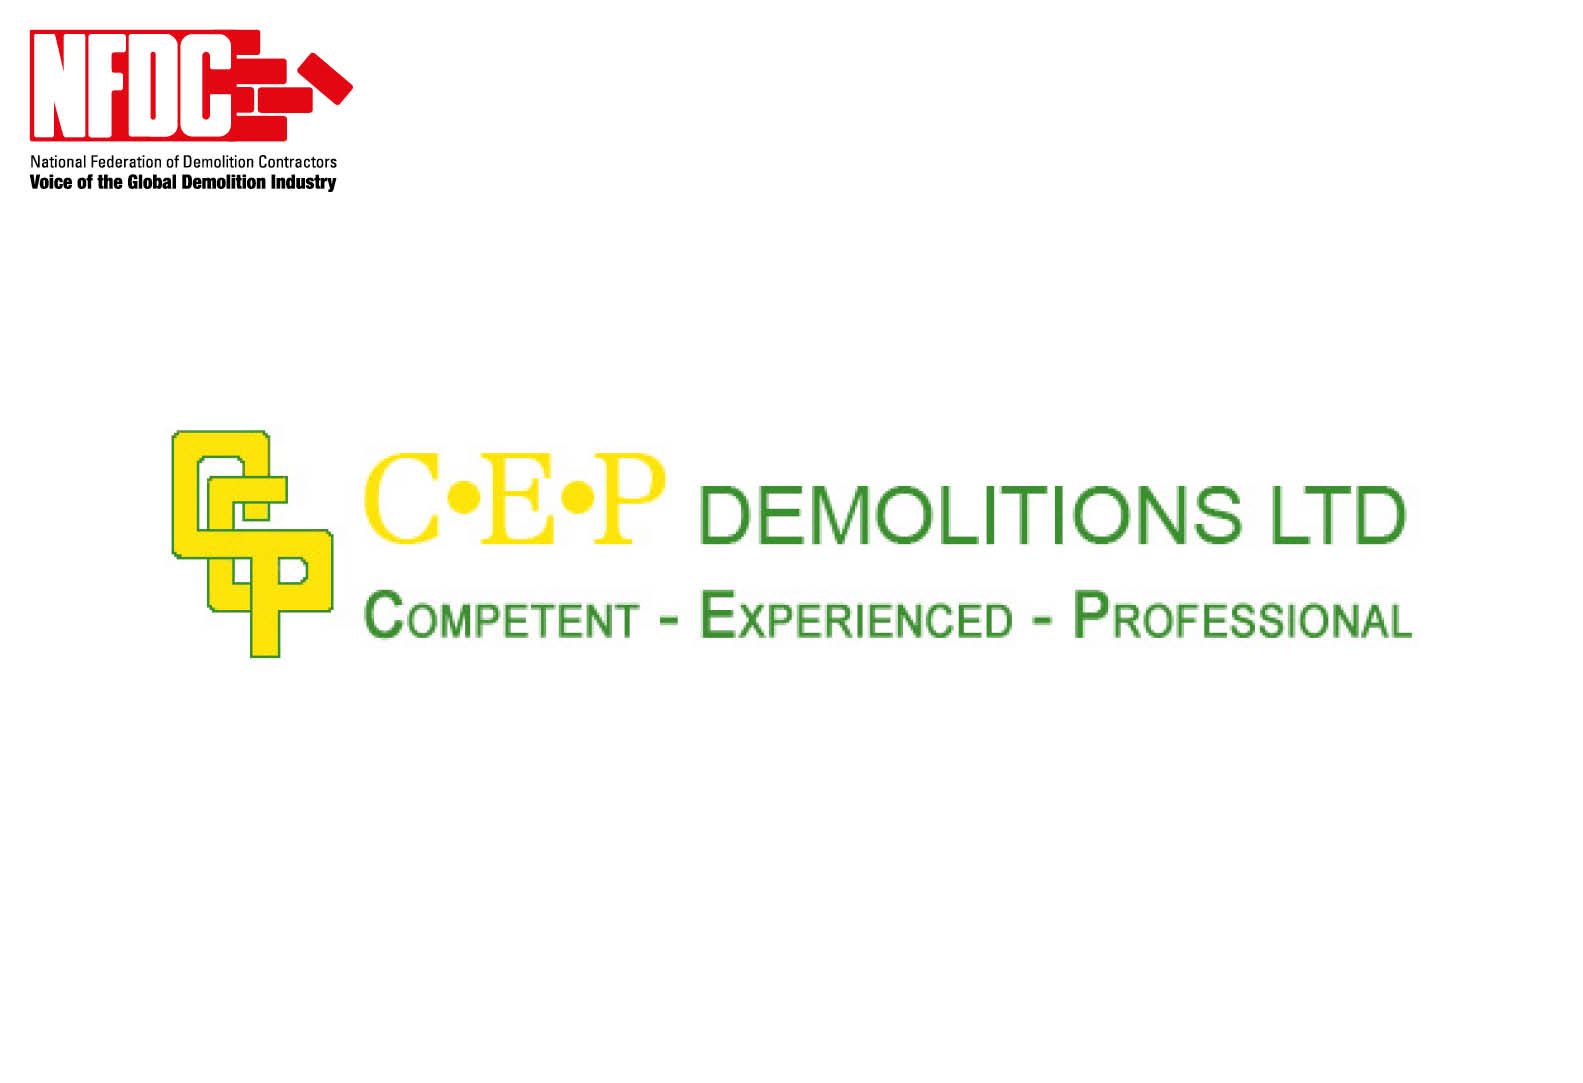 CEP Demolitions Ltd